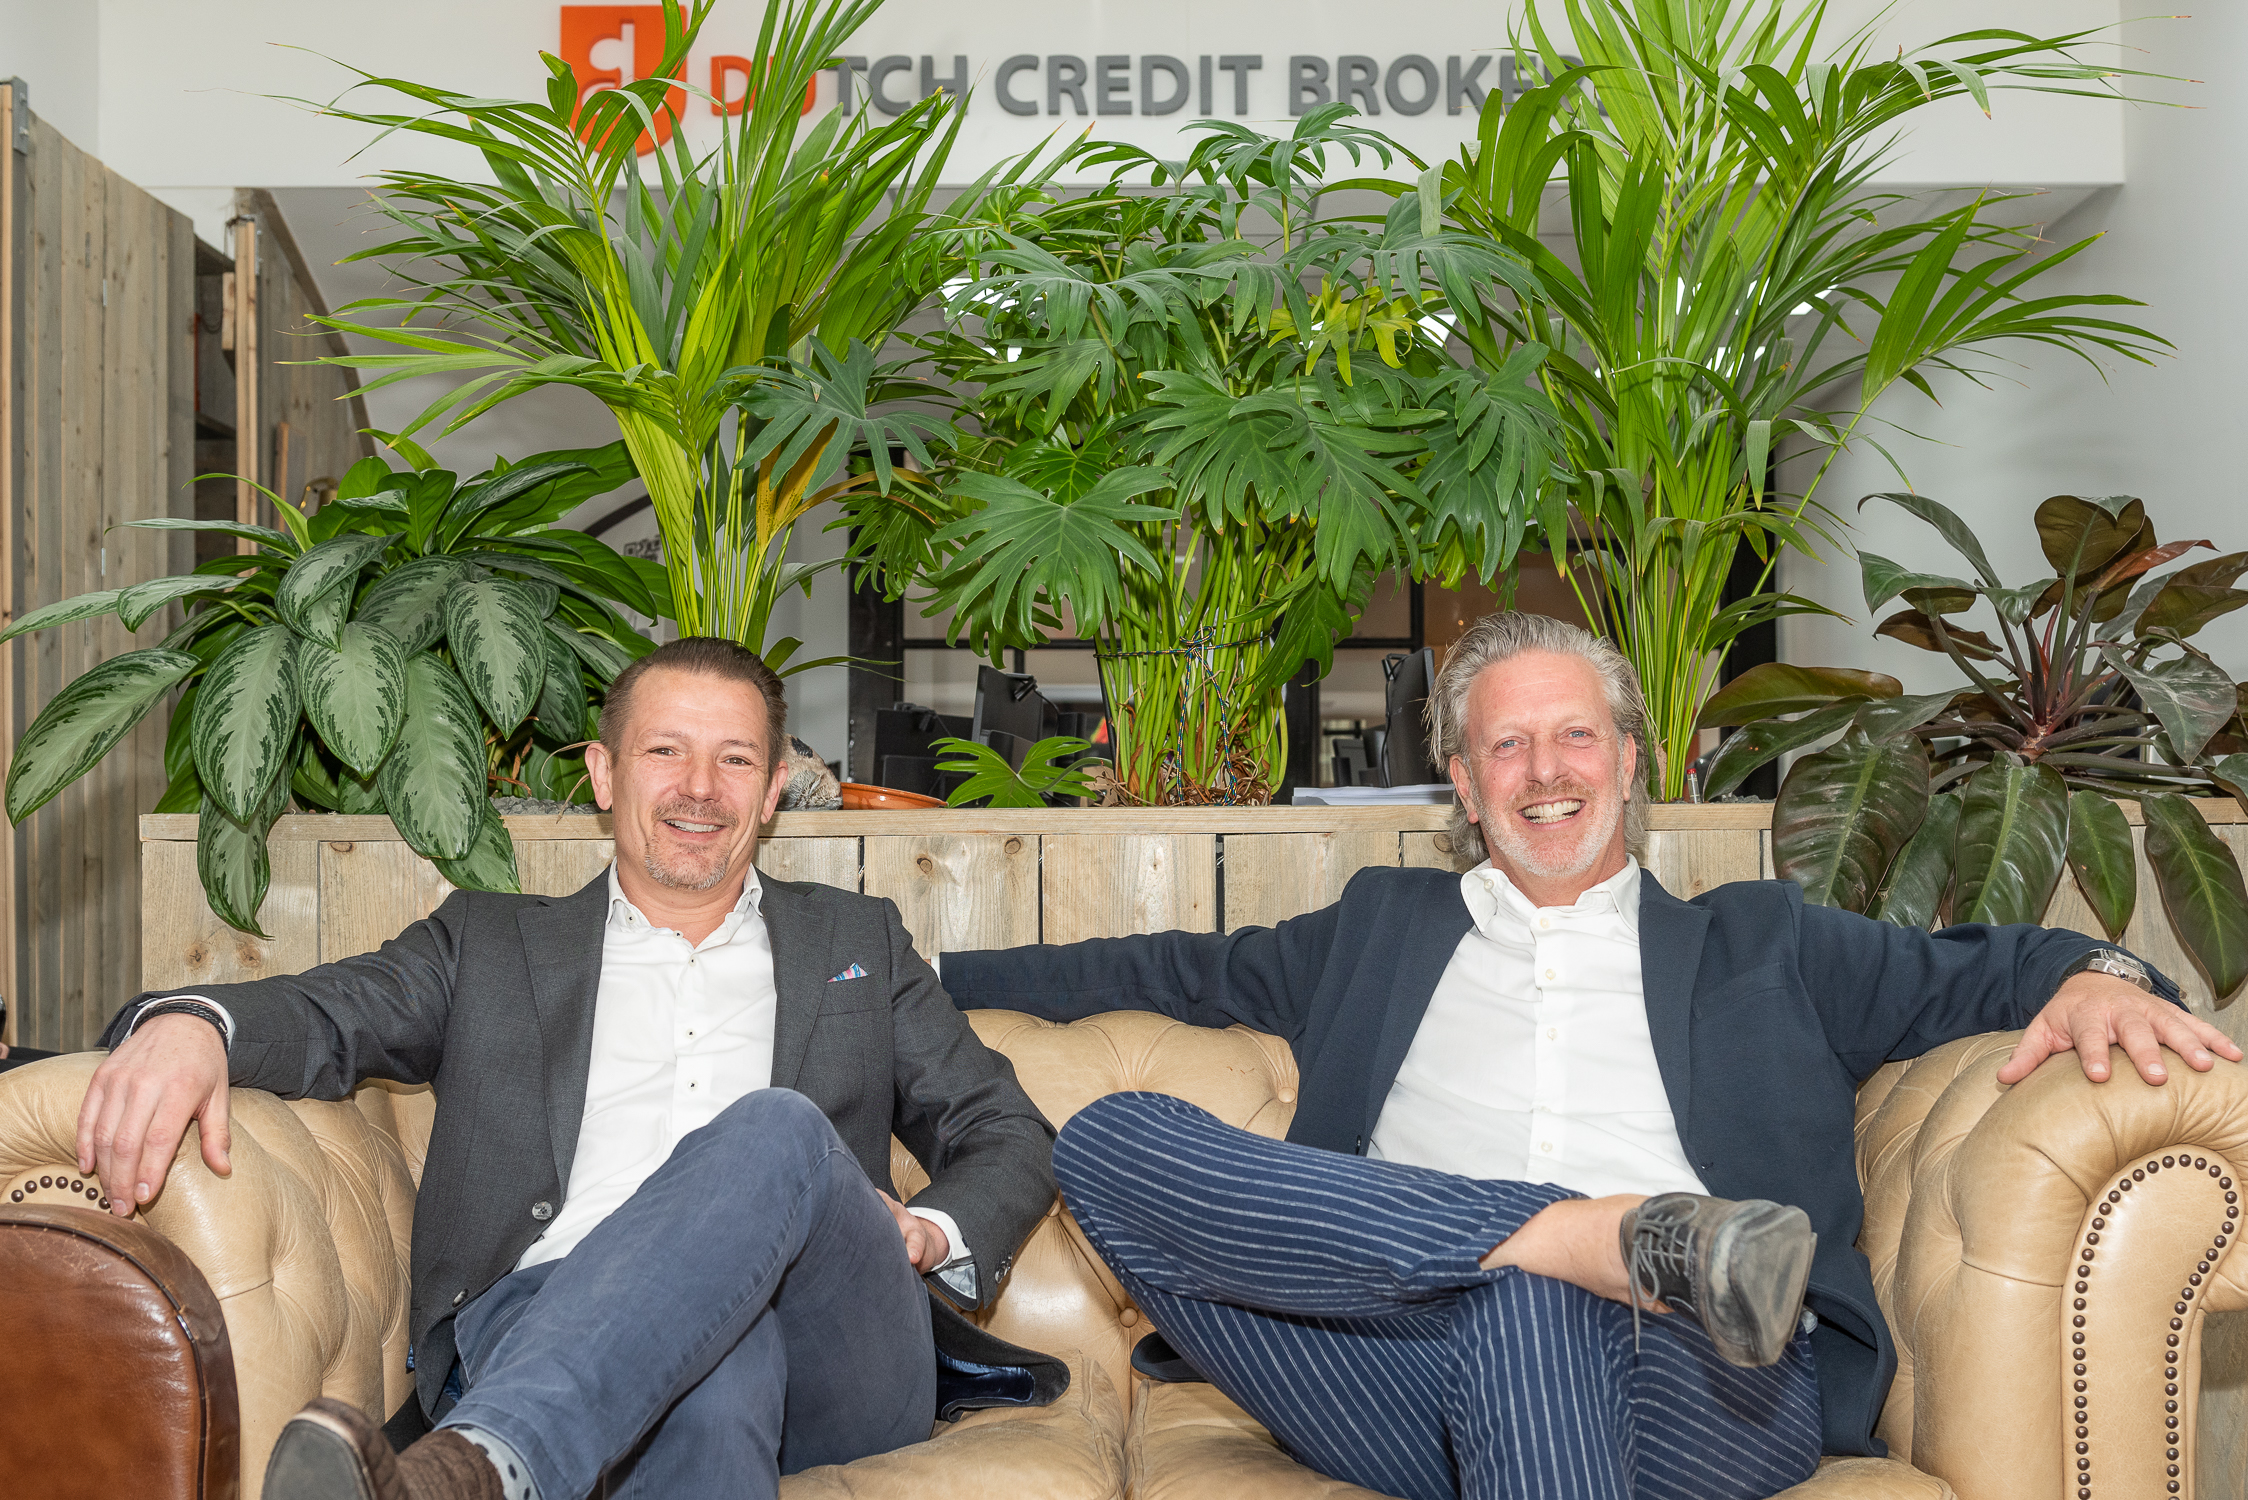 Dutch Credit Brokers 201